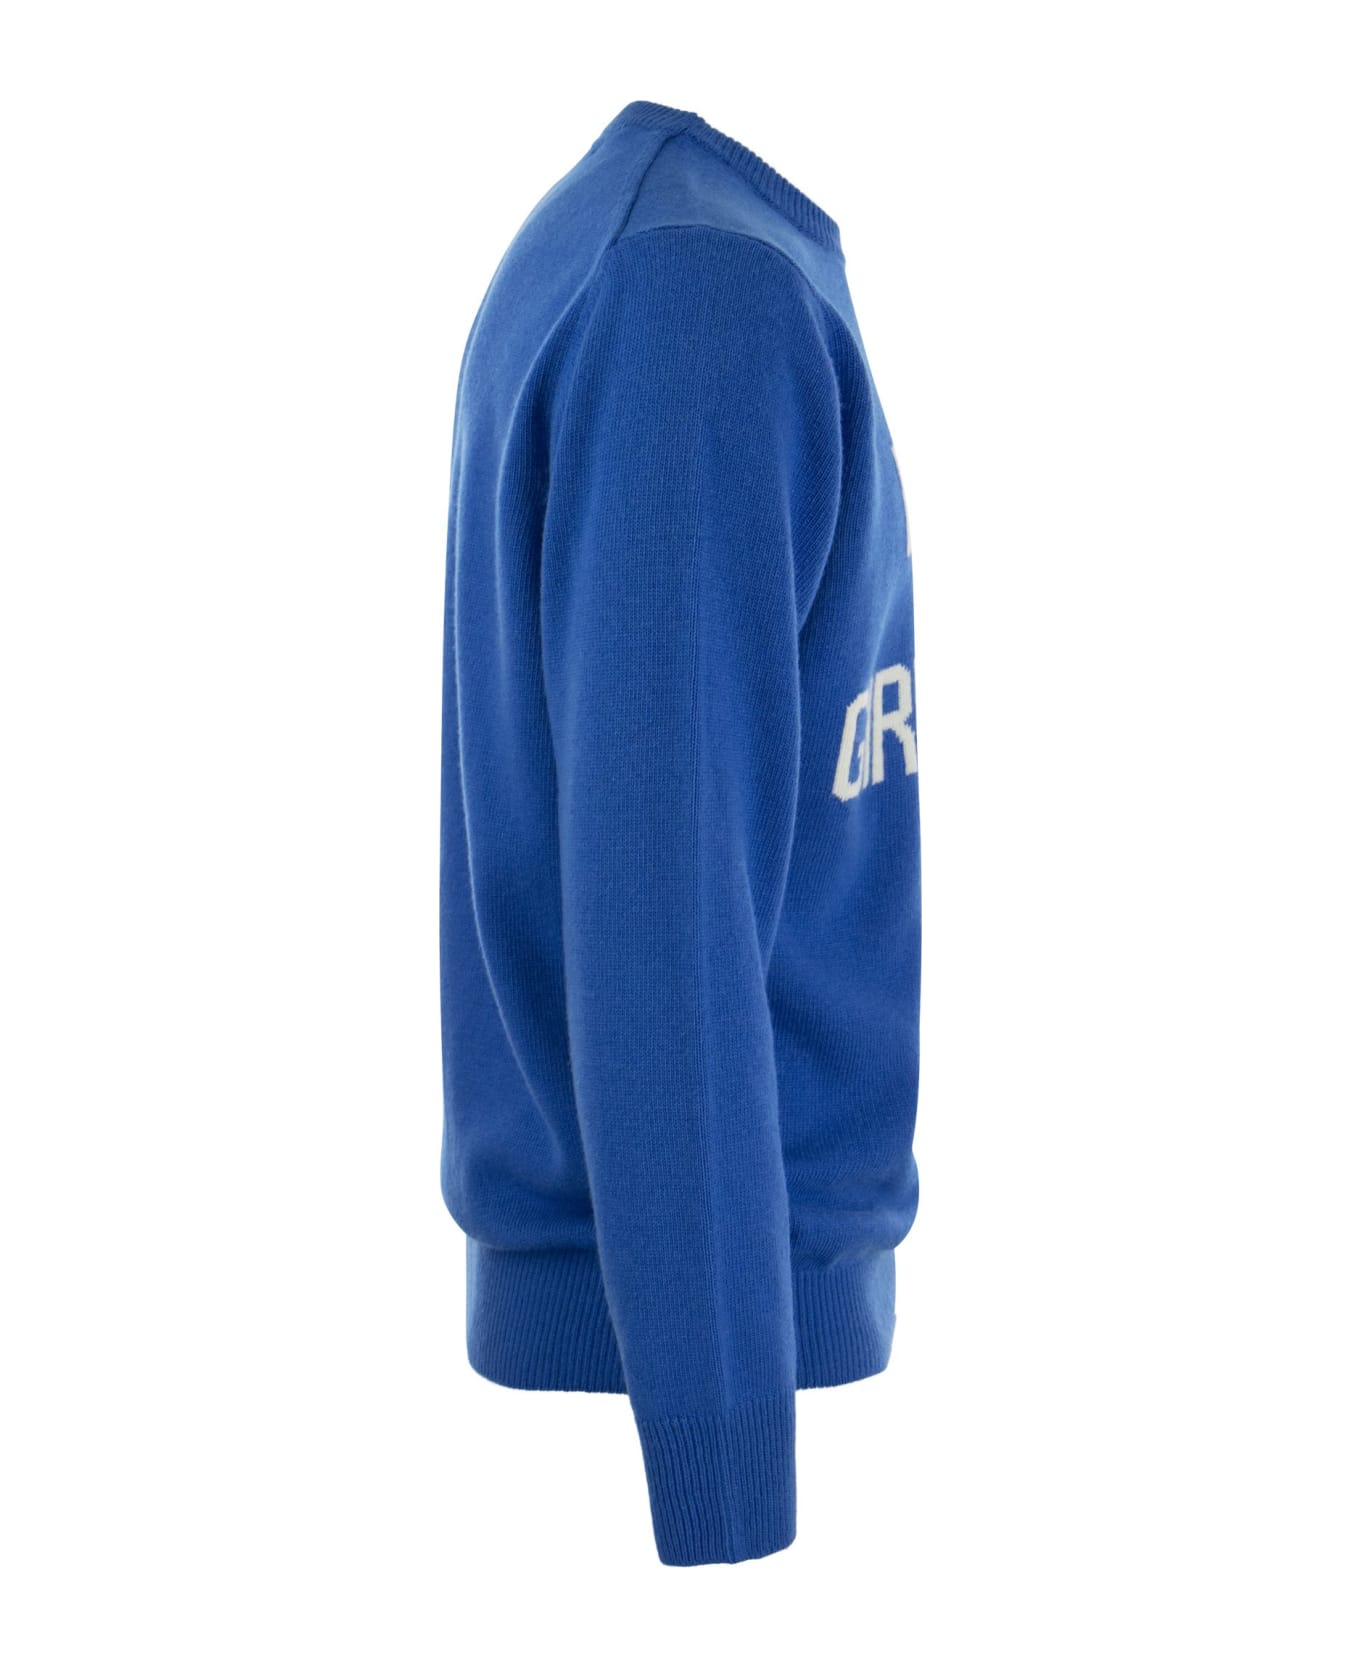 MC2 Saint Barth Padel Vs Girlfriend Wool And Cashmere Blend Jumper Sweater - BLUETTE ニットウェア